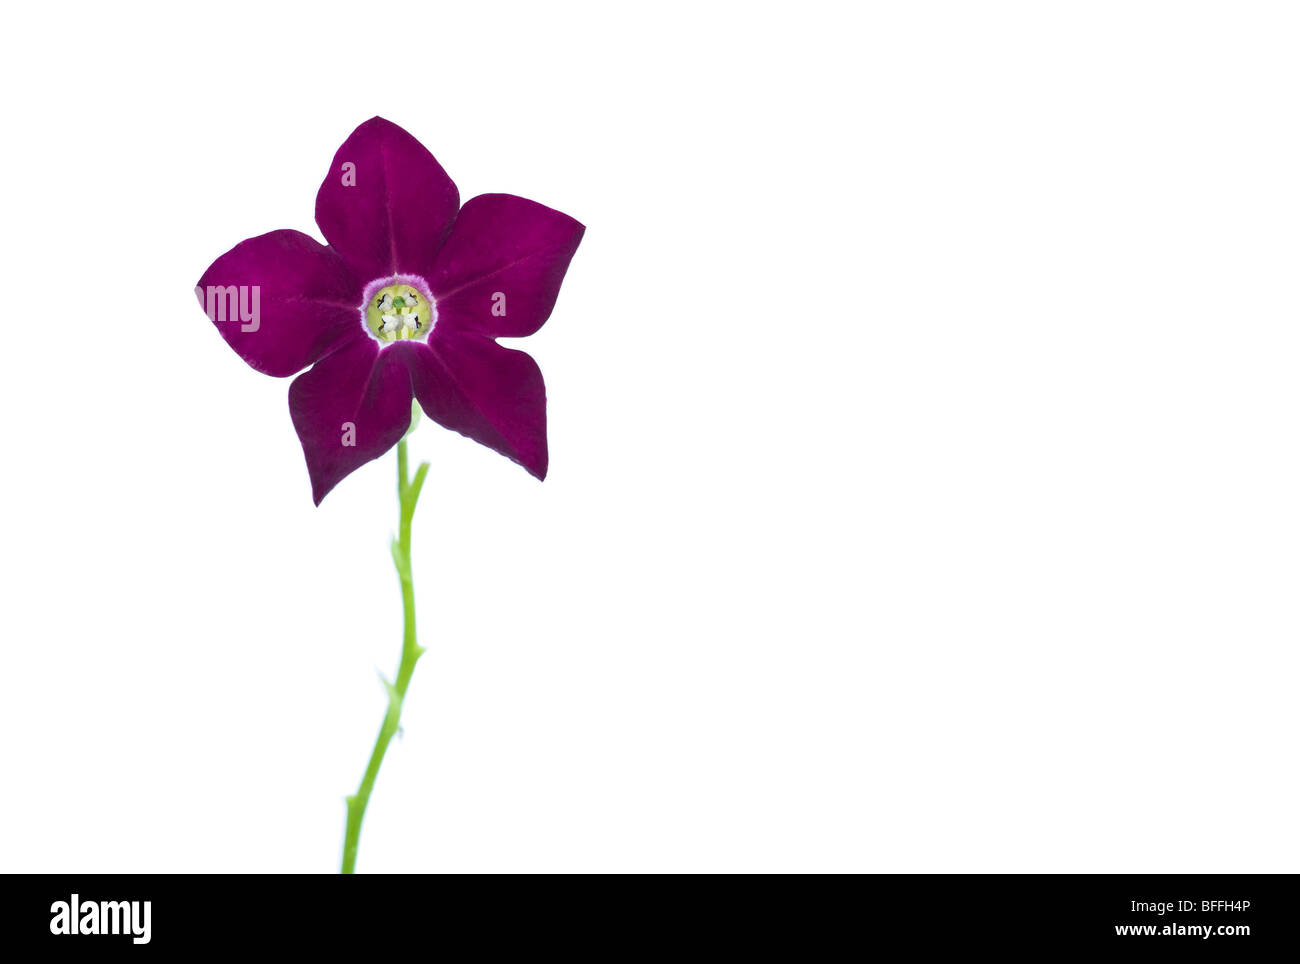 Portrait of a Purple Tobacco Nicotania Flower, on a White Background. Stock Photo